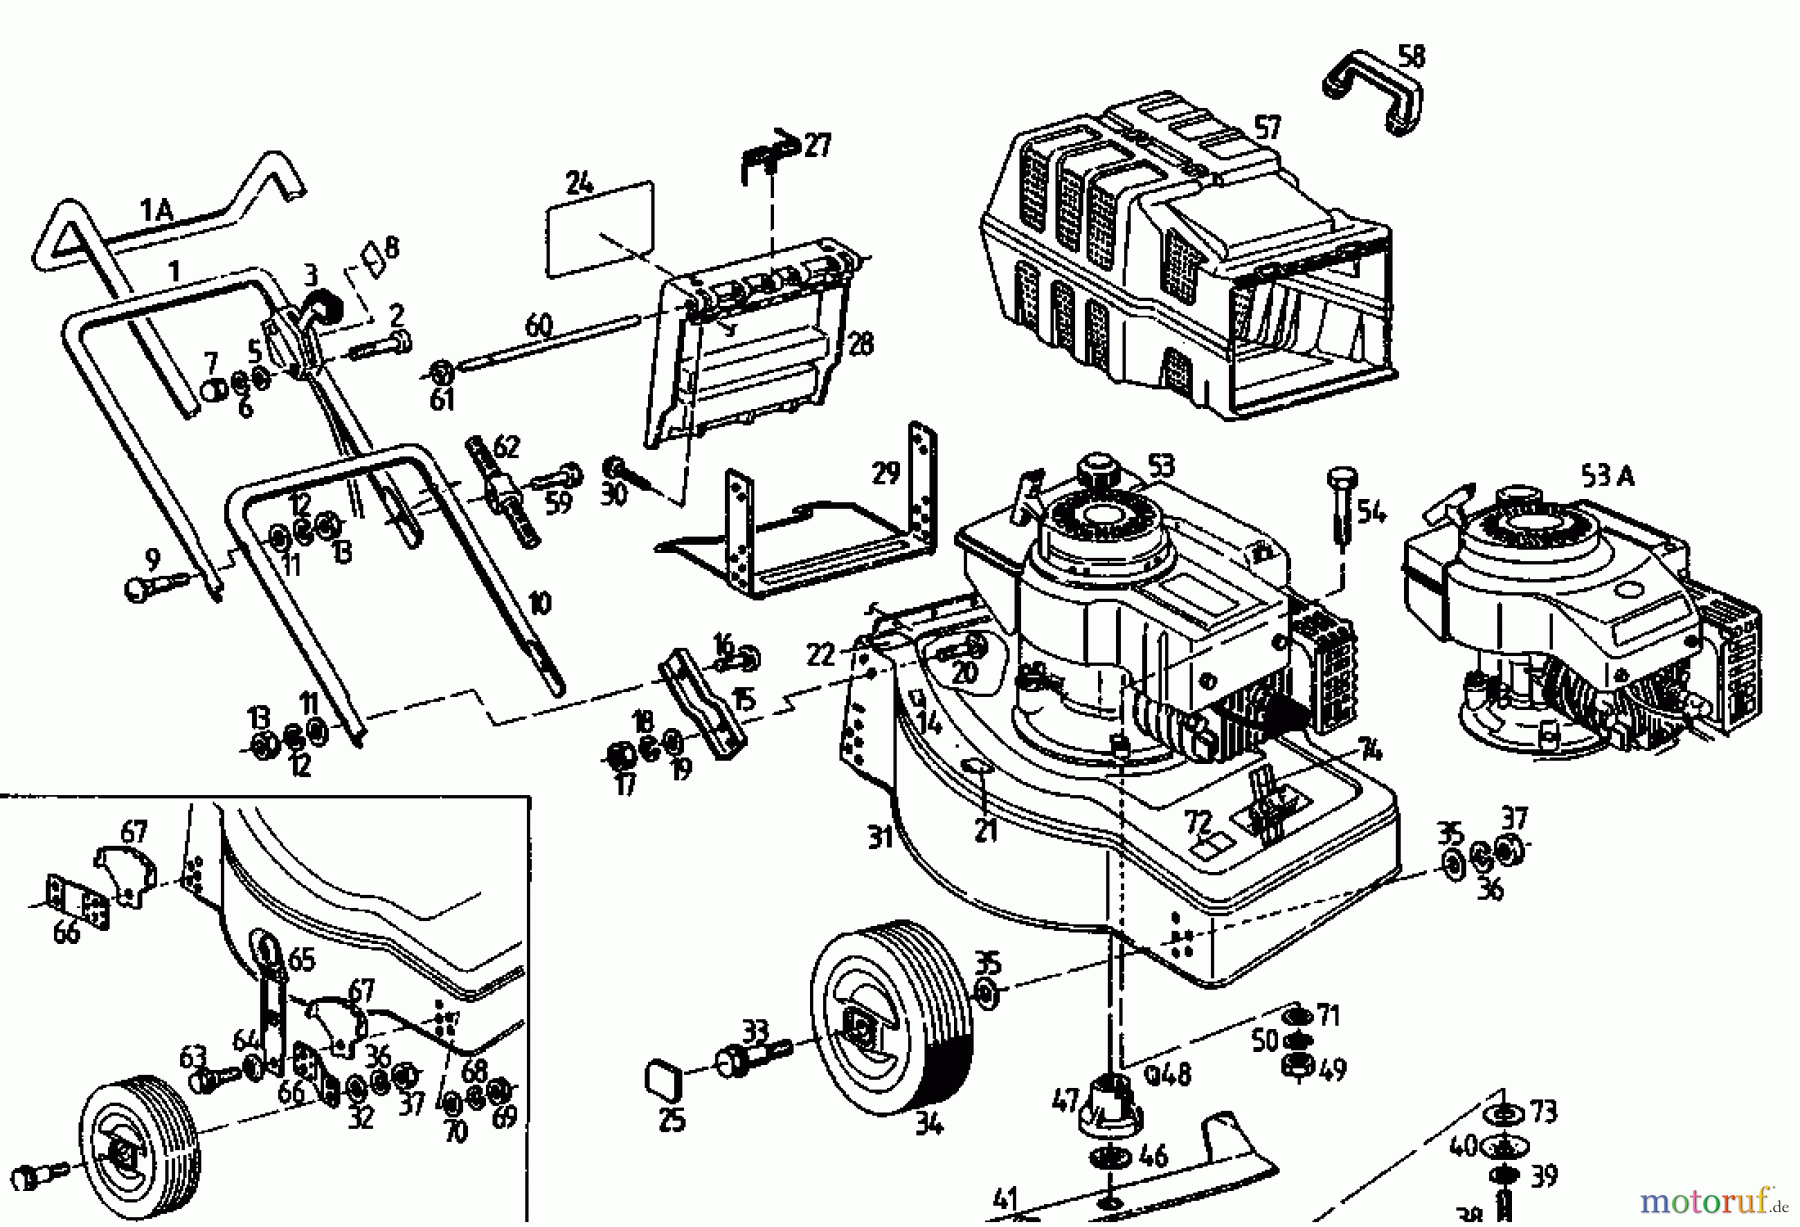  Golf Petrol mower B 02813.04  (1993) Basic machine